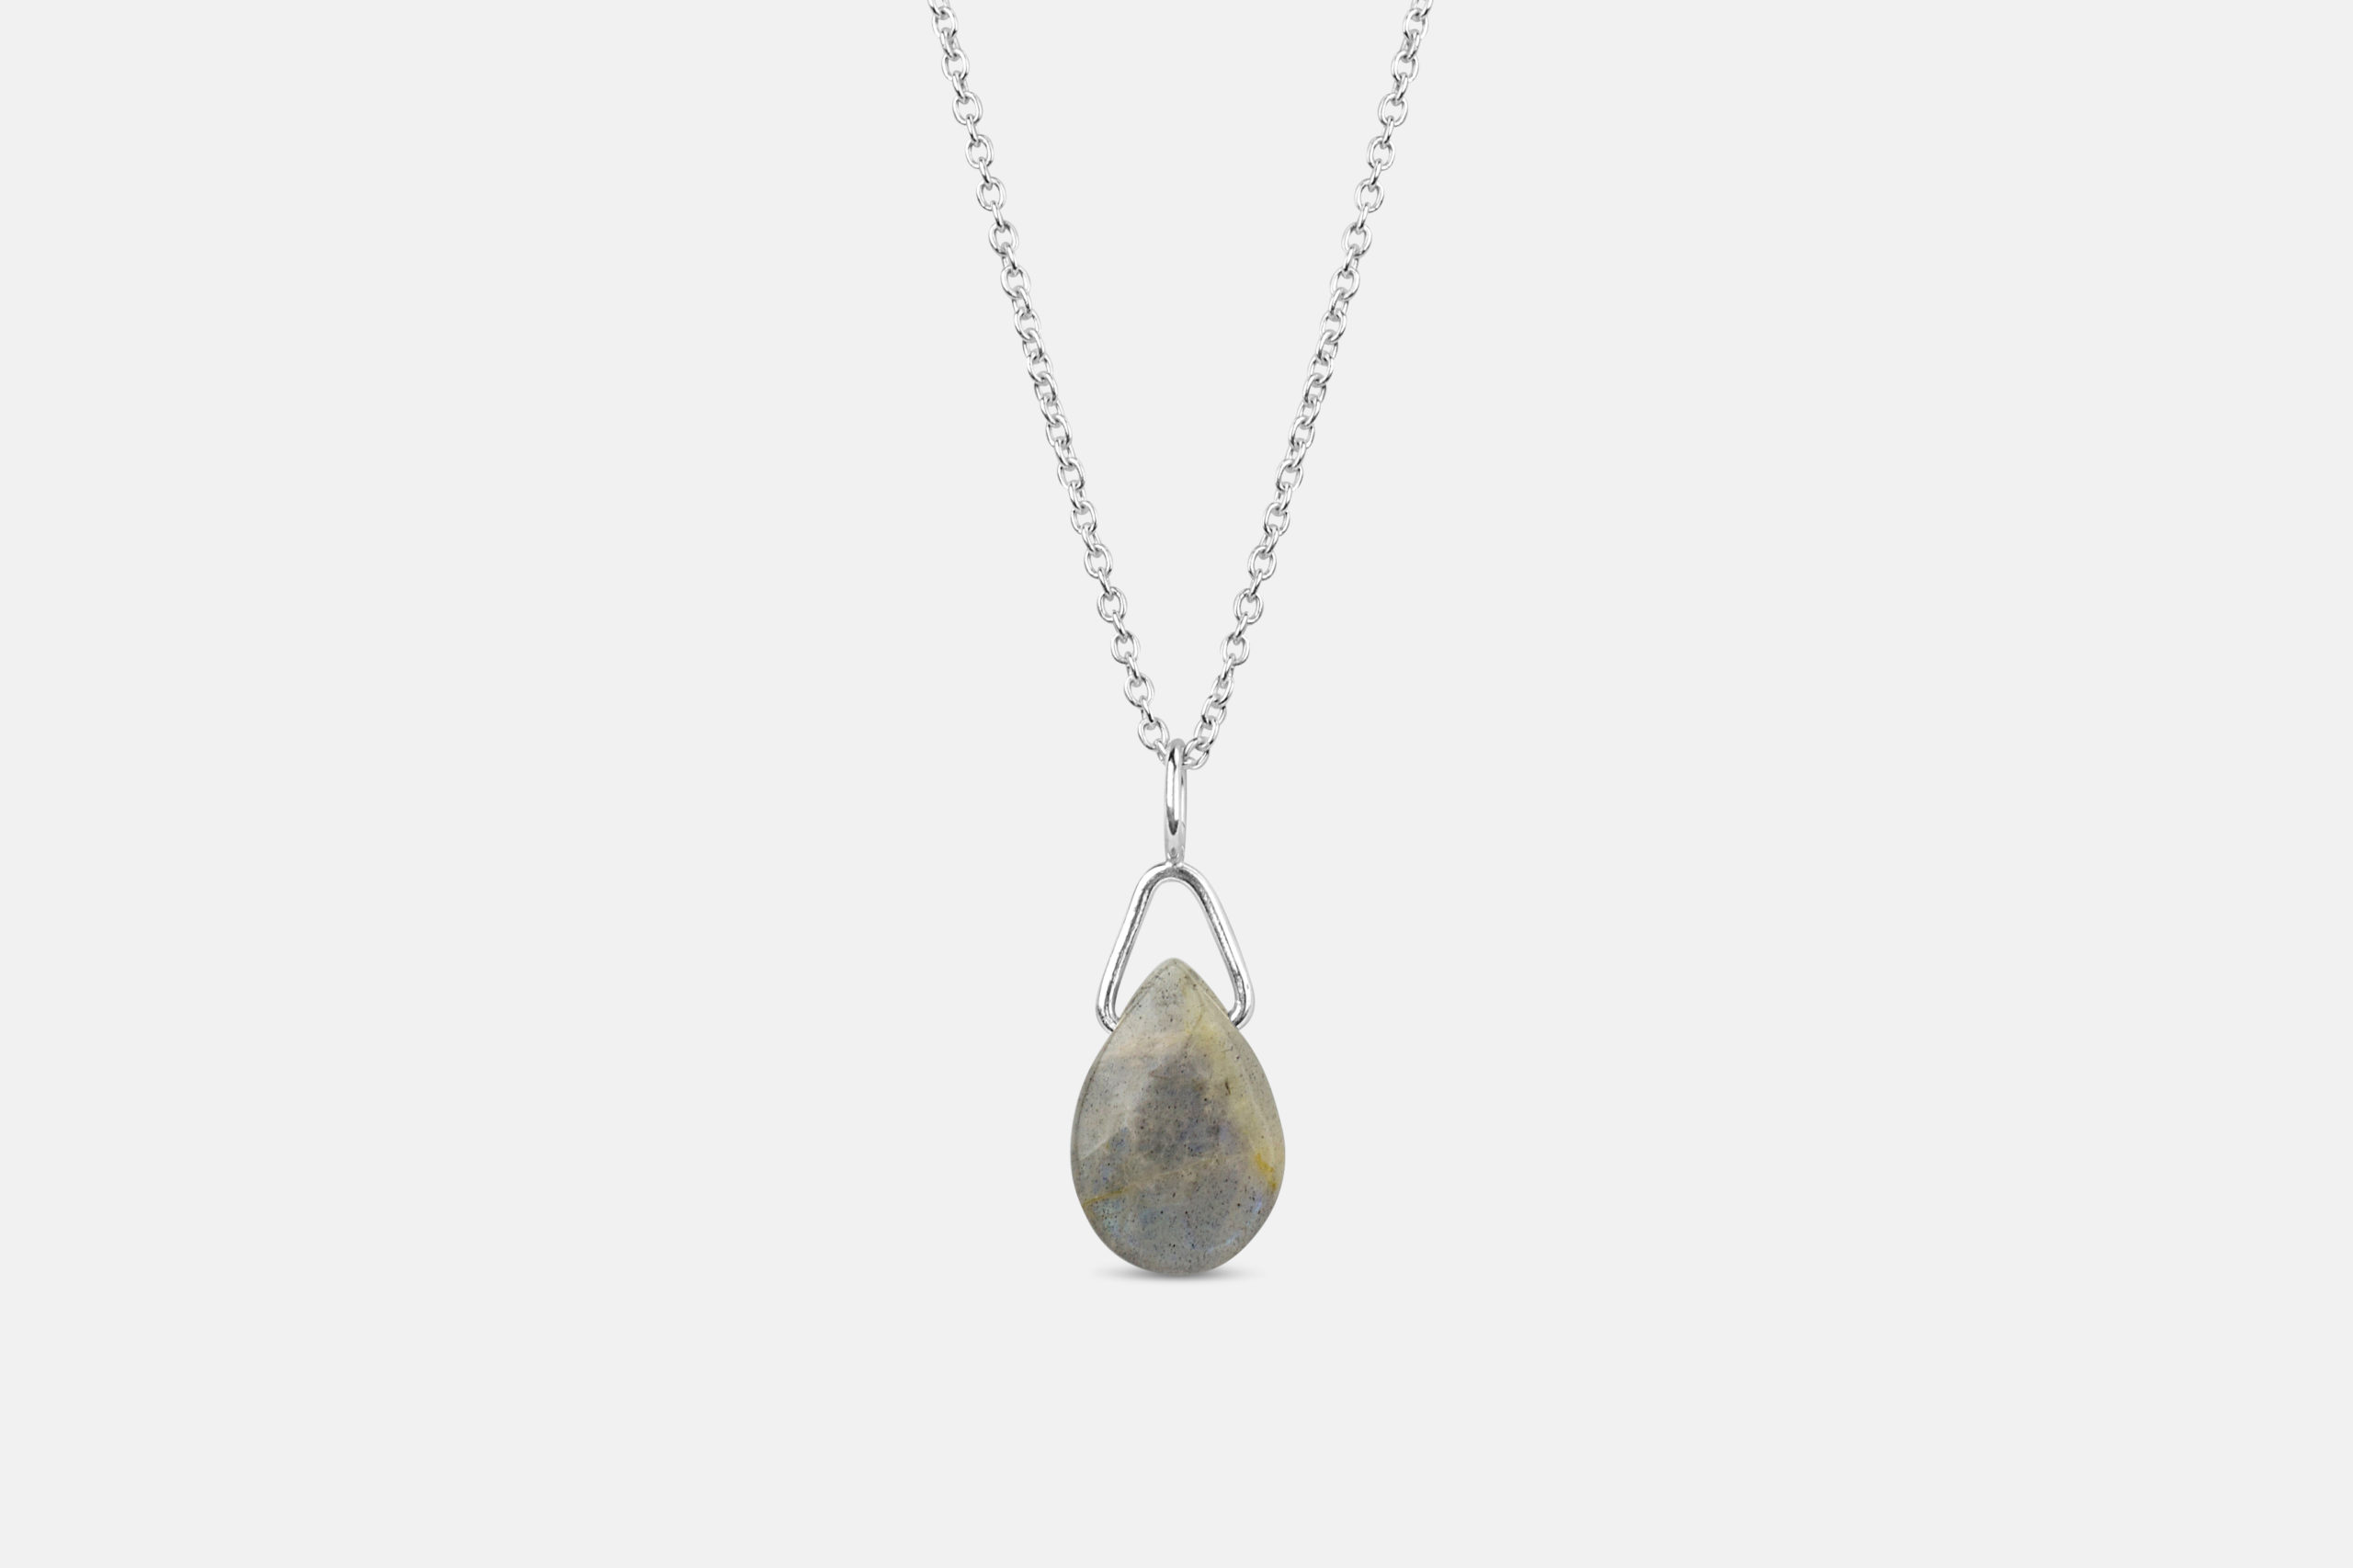 Labradorite tar necklace in sterling silver